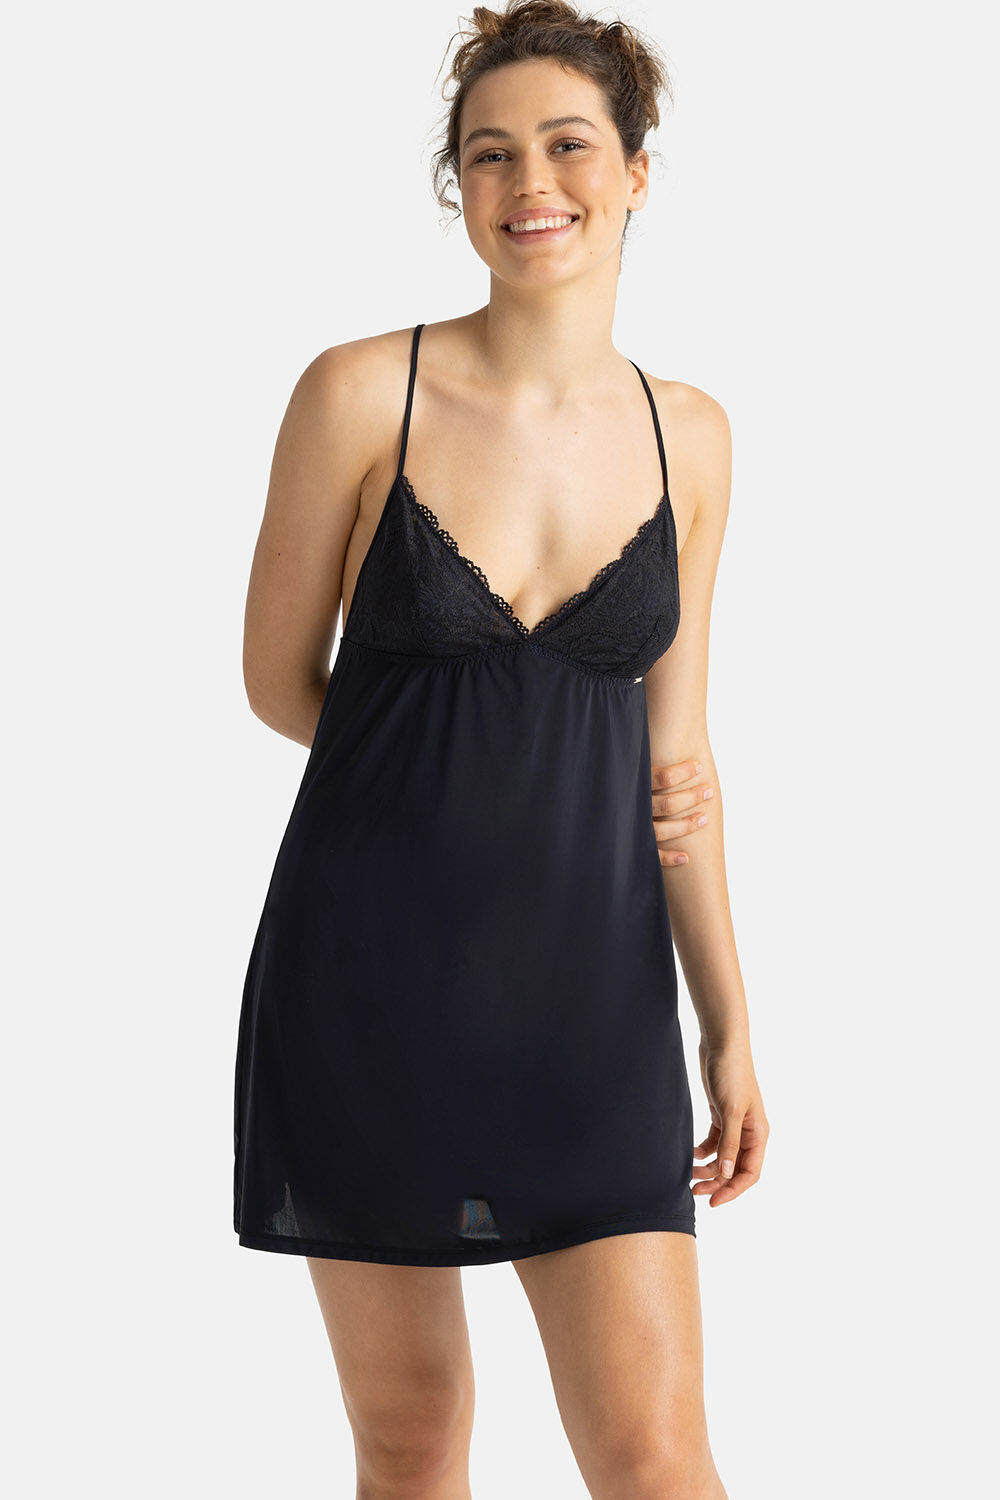 DORINA Women’s Black Lace Stylish Slip Dress, Size: 18